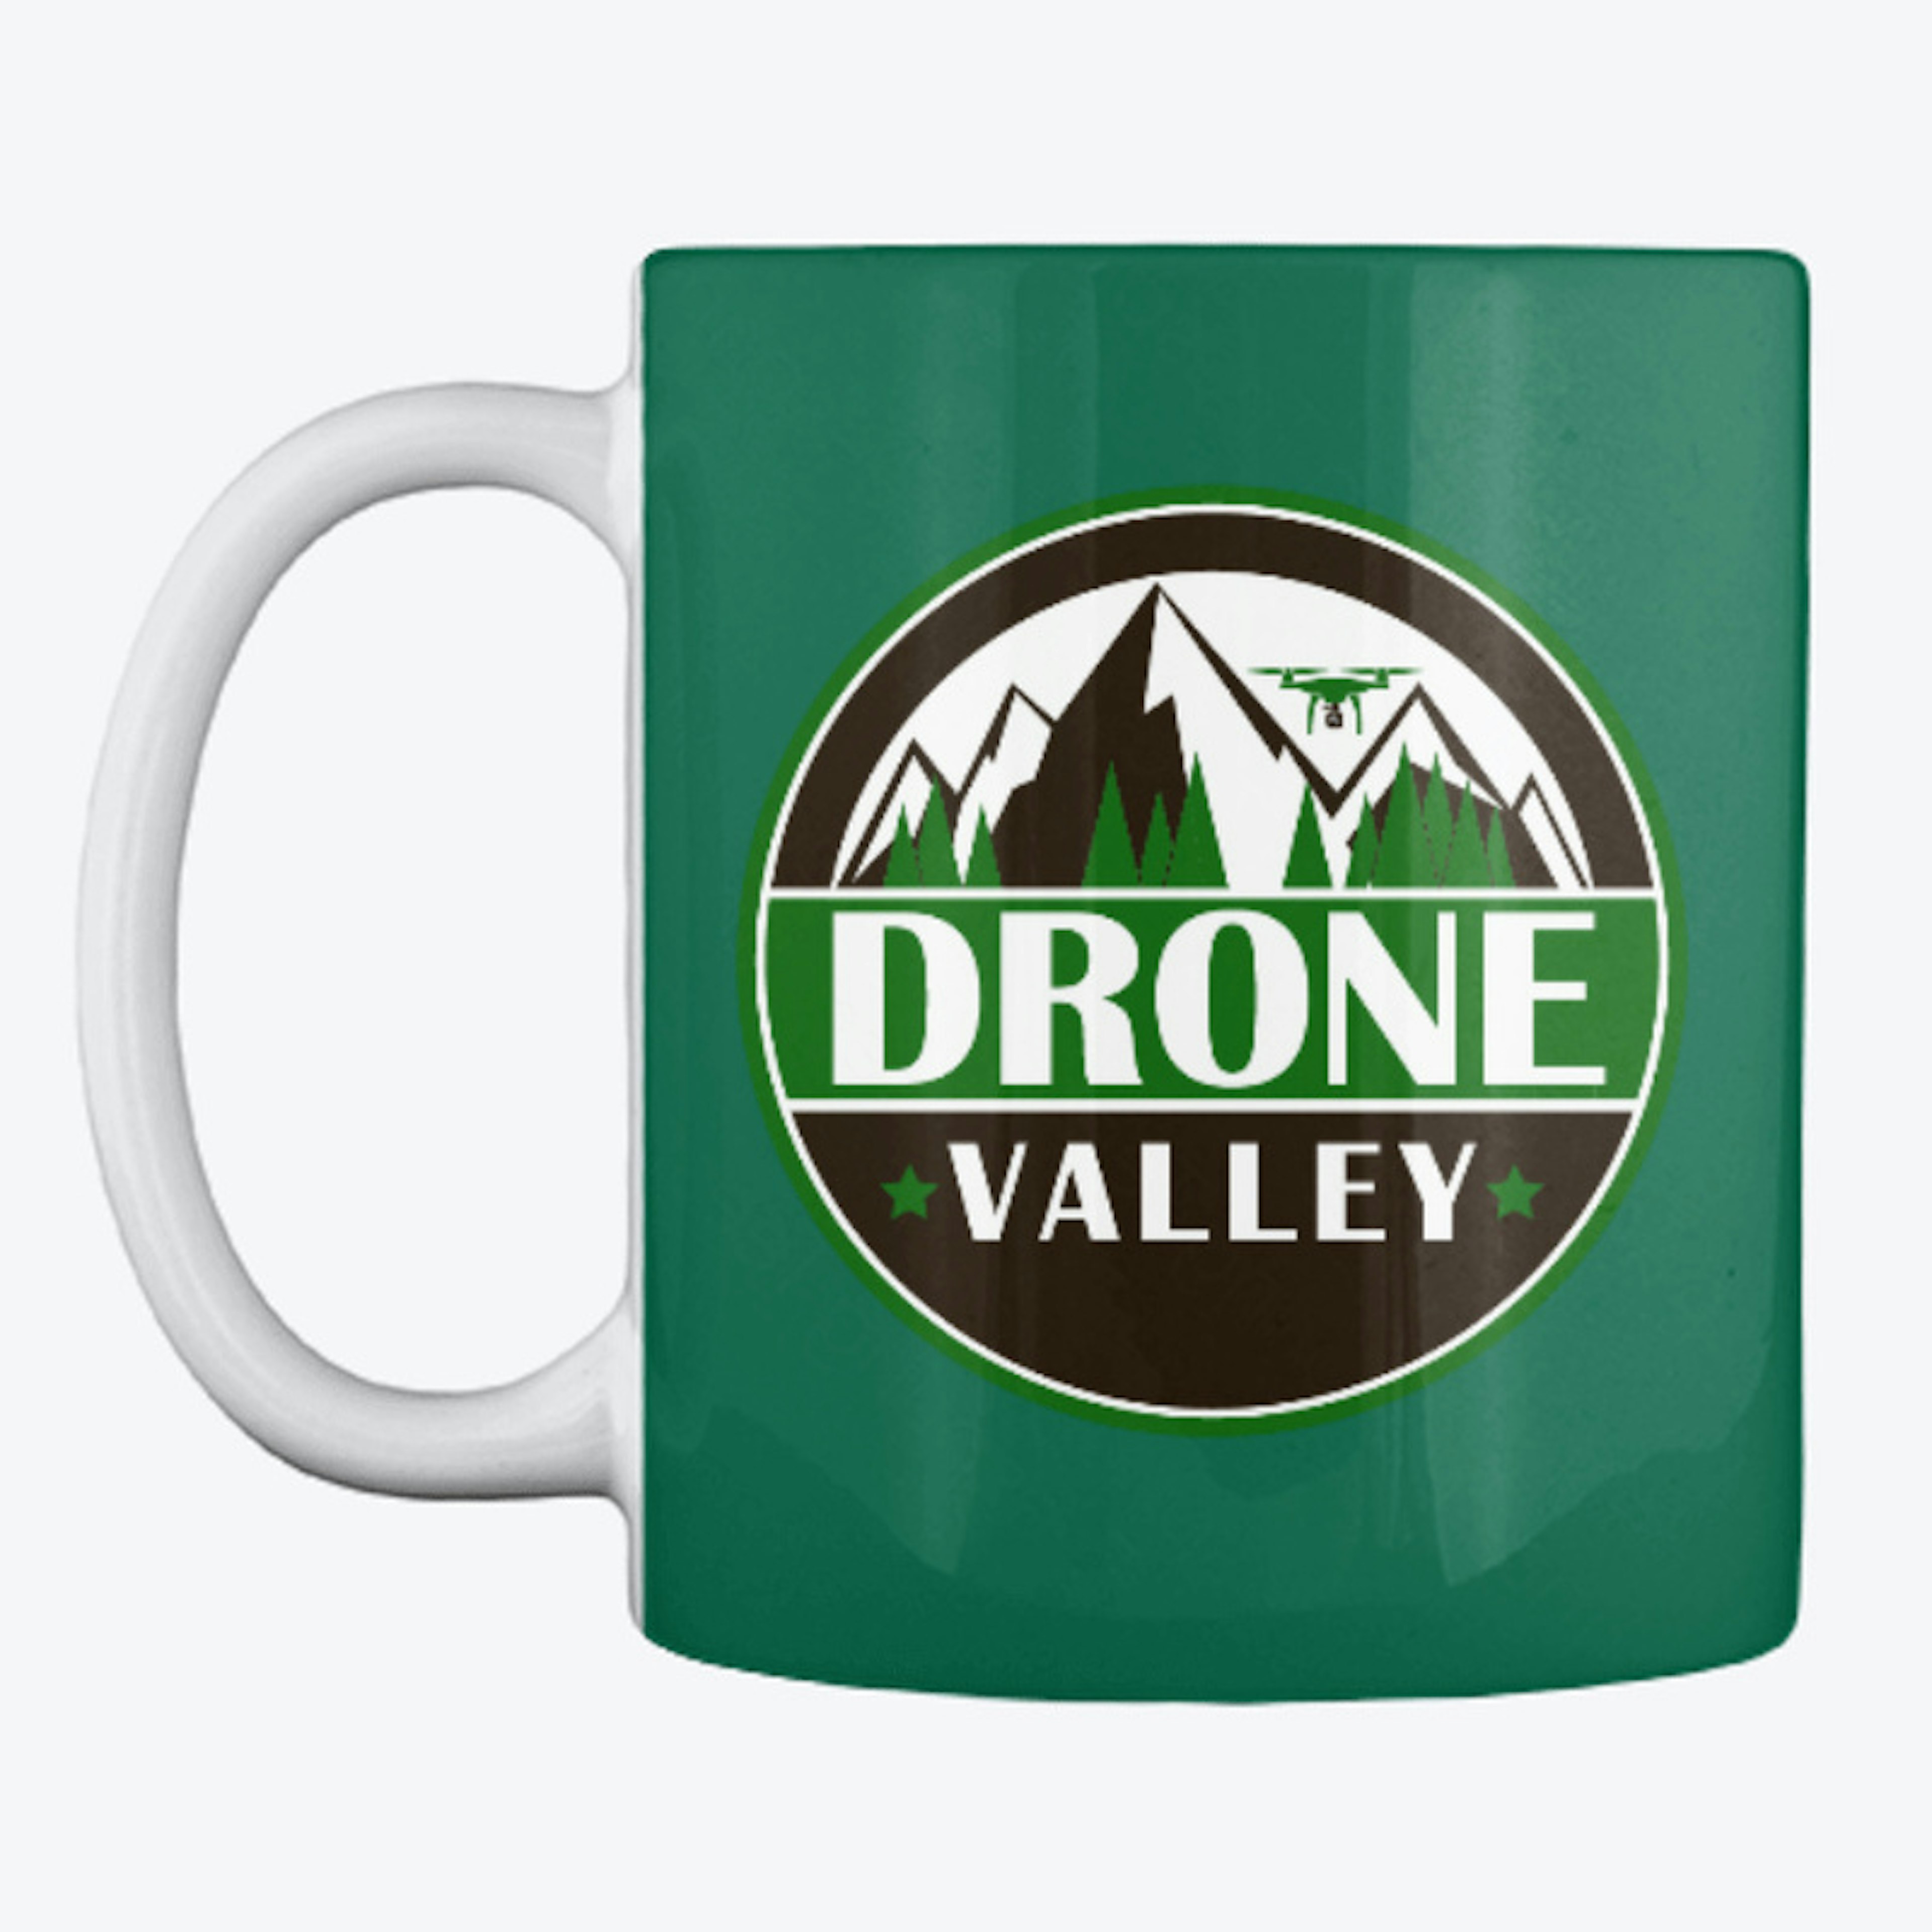 Drone Valley Logo Mug